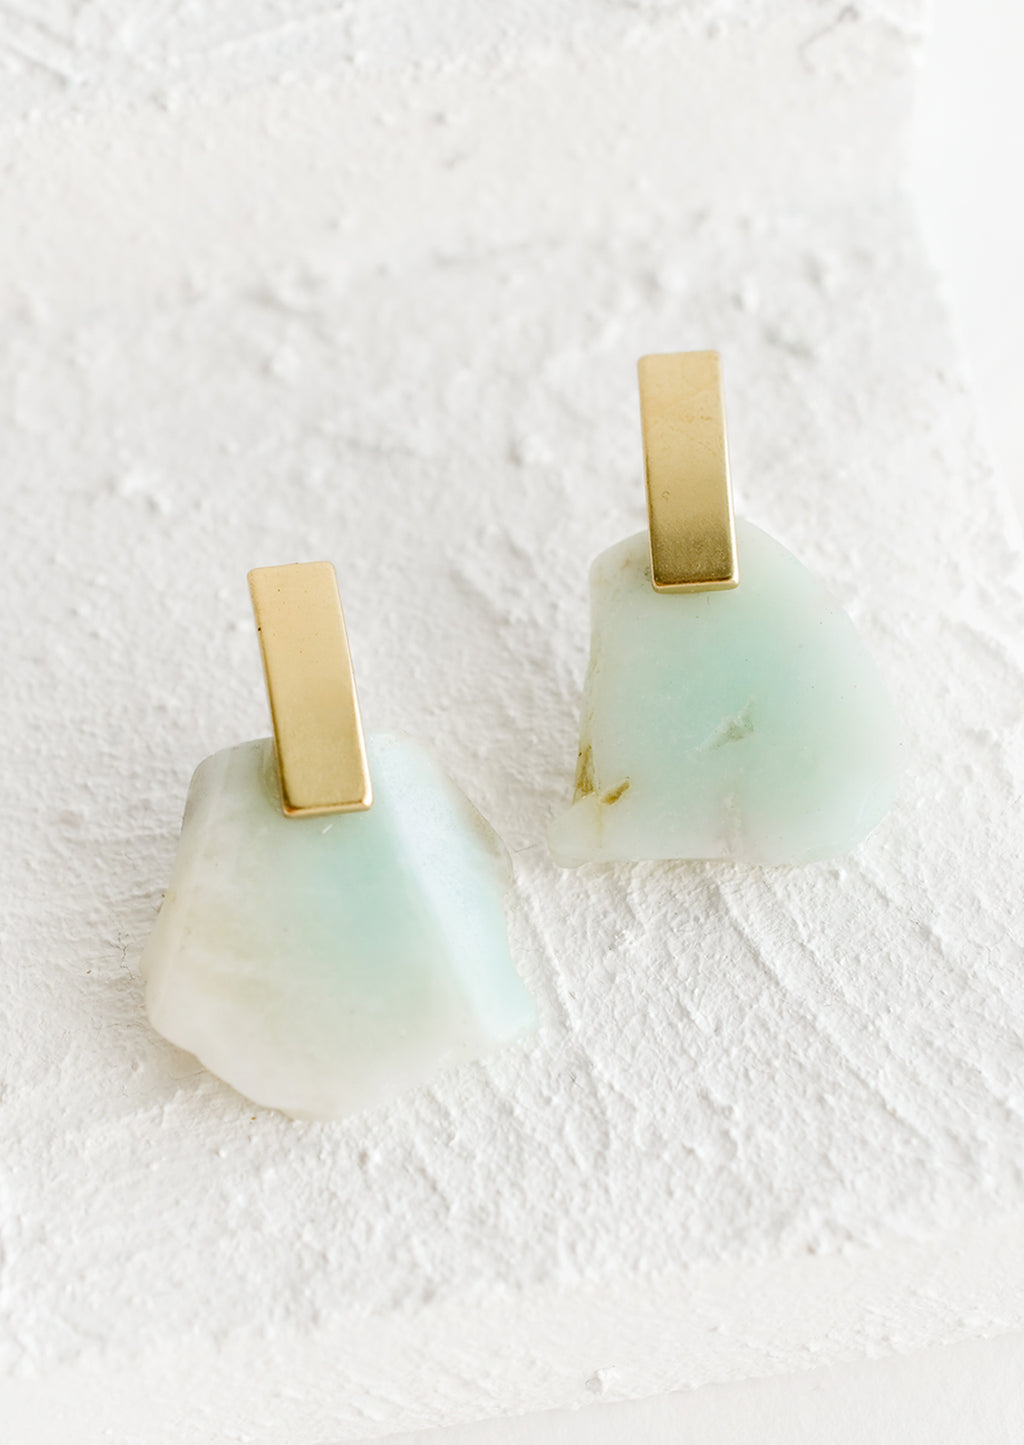 Amazonite: Pair of earrings with raw amazonite gemstone slice and rectangular brass posts.